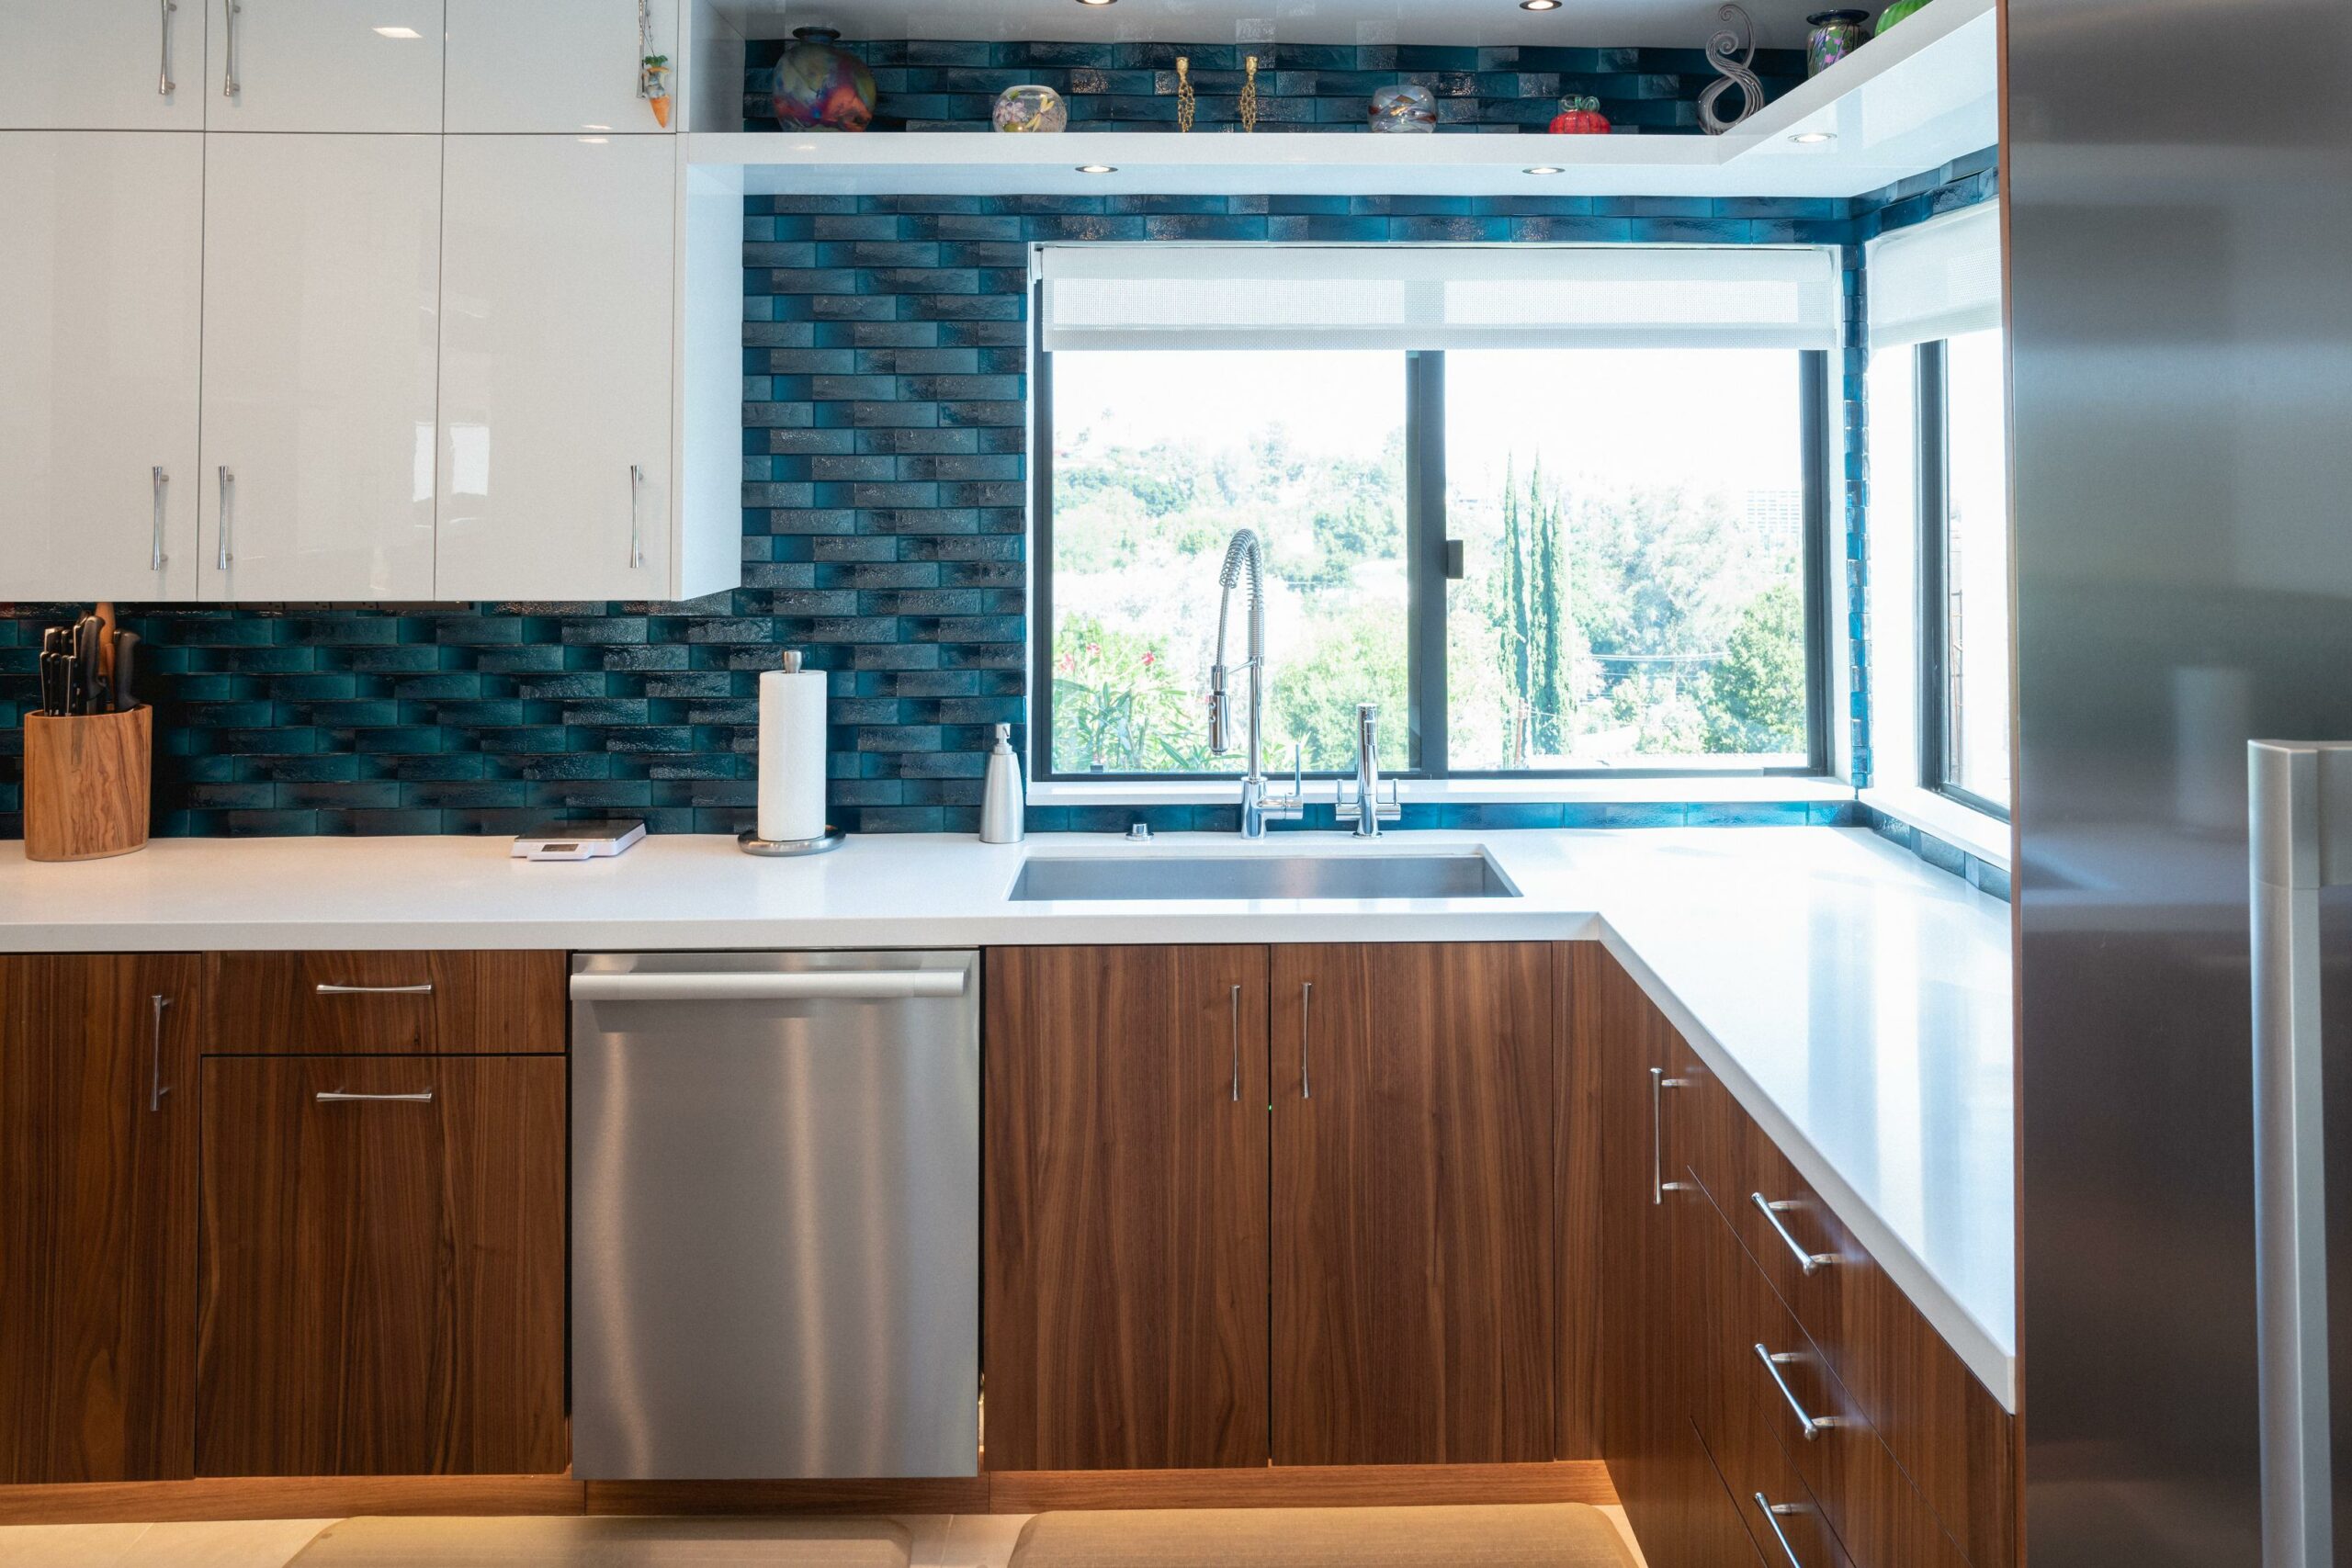 Modern kitchen with blue backsplash and wooden cabinets.